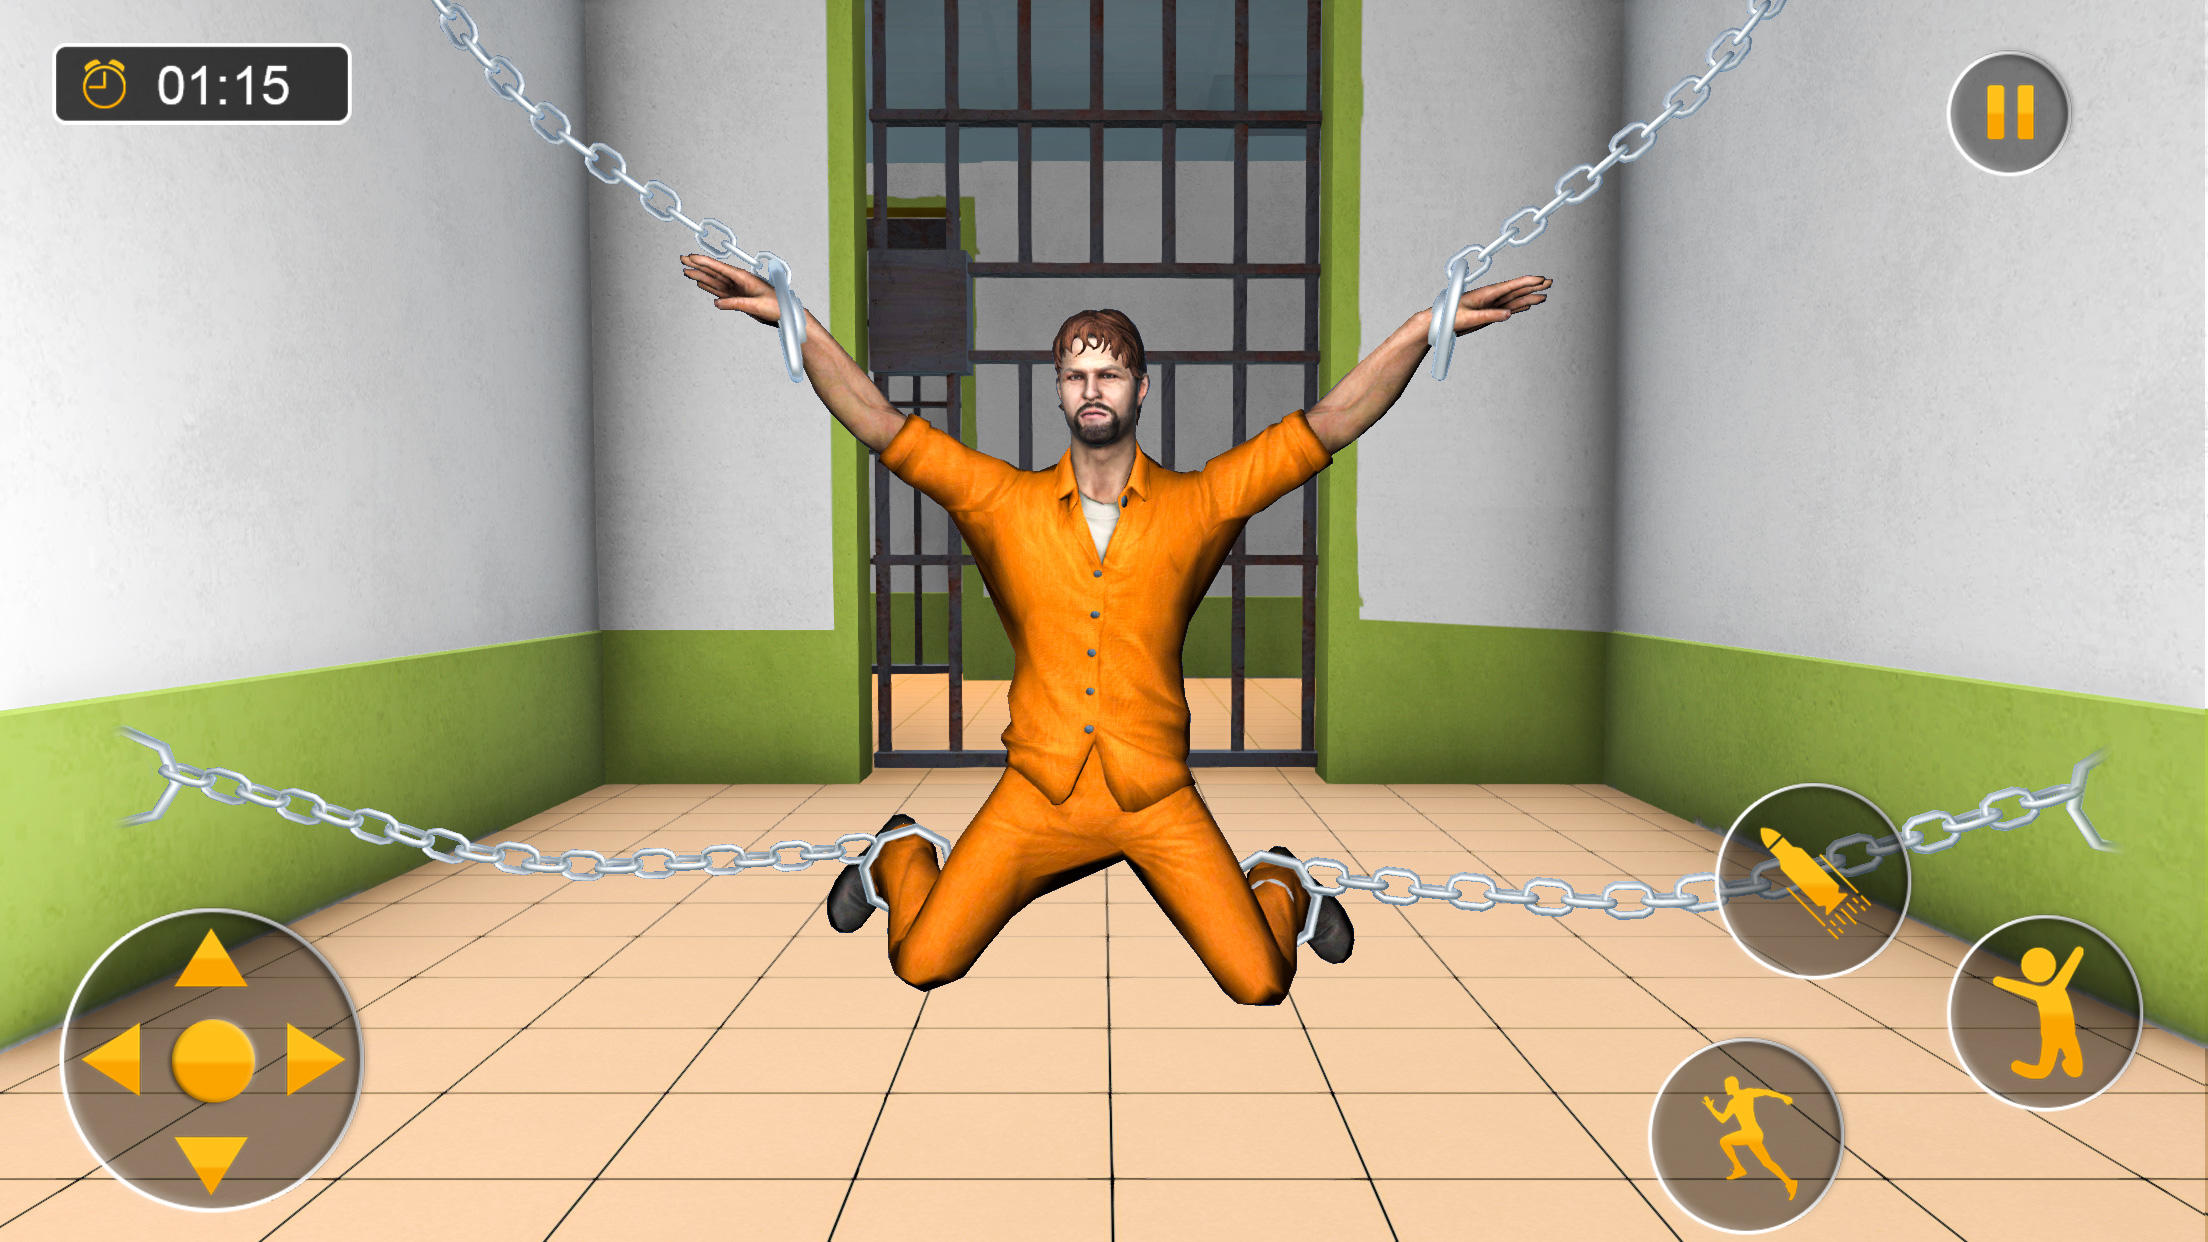 Grand Jail Prison Break Escape APK for Android - Download